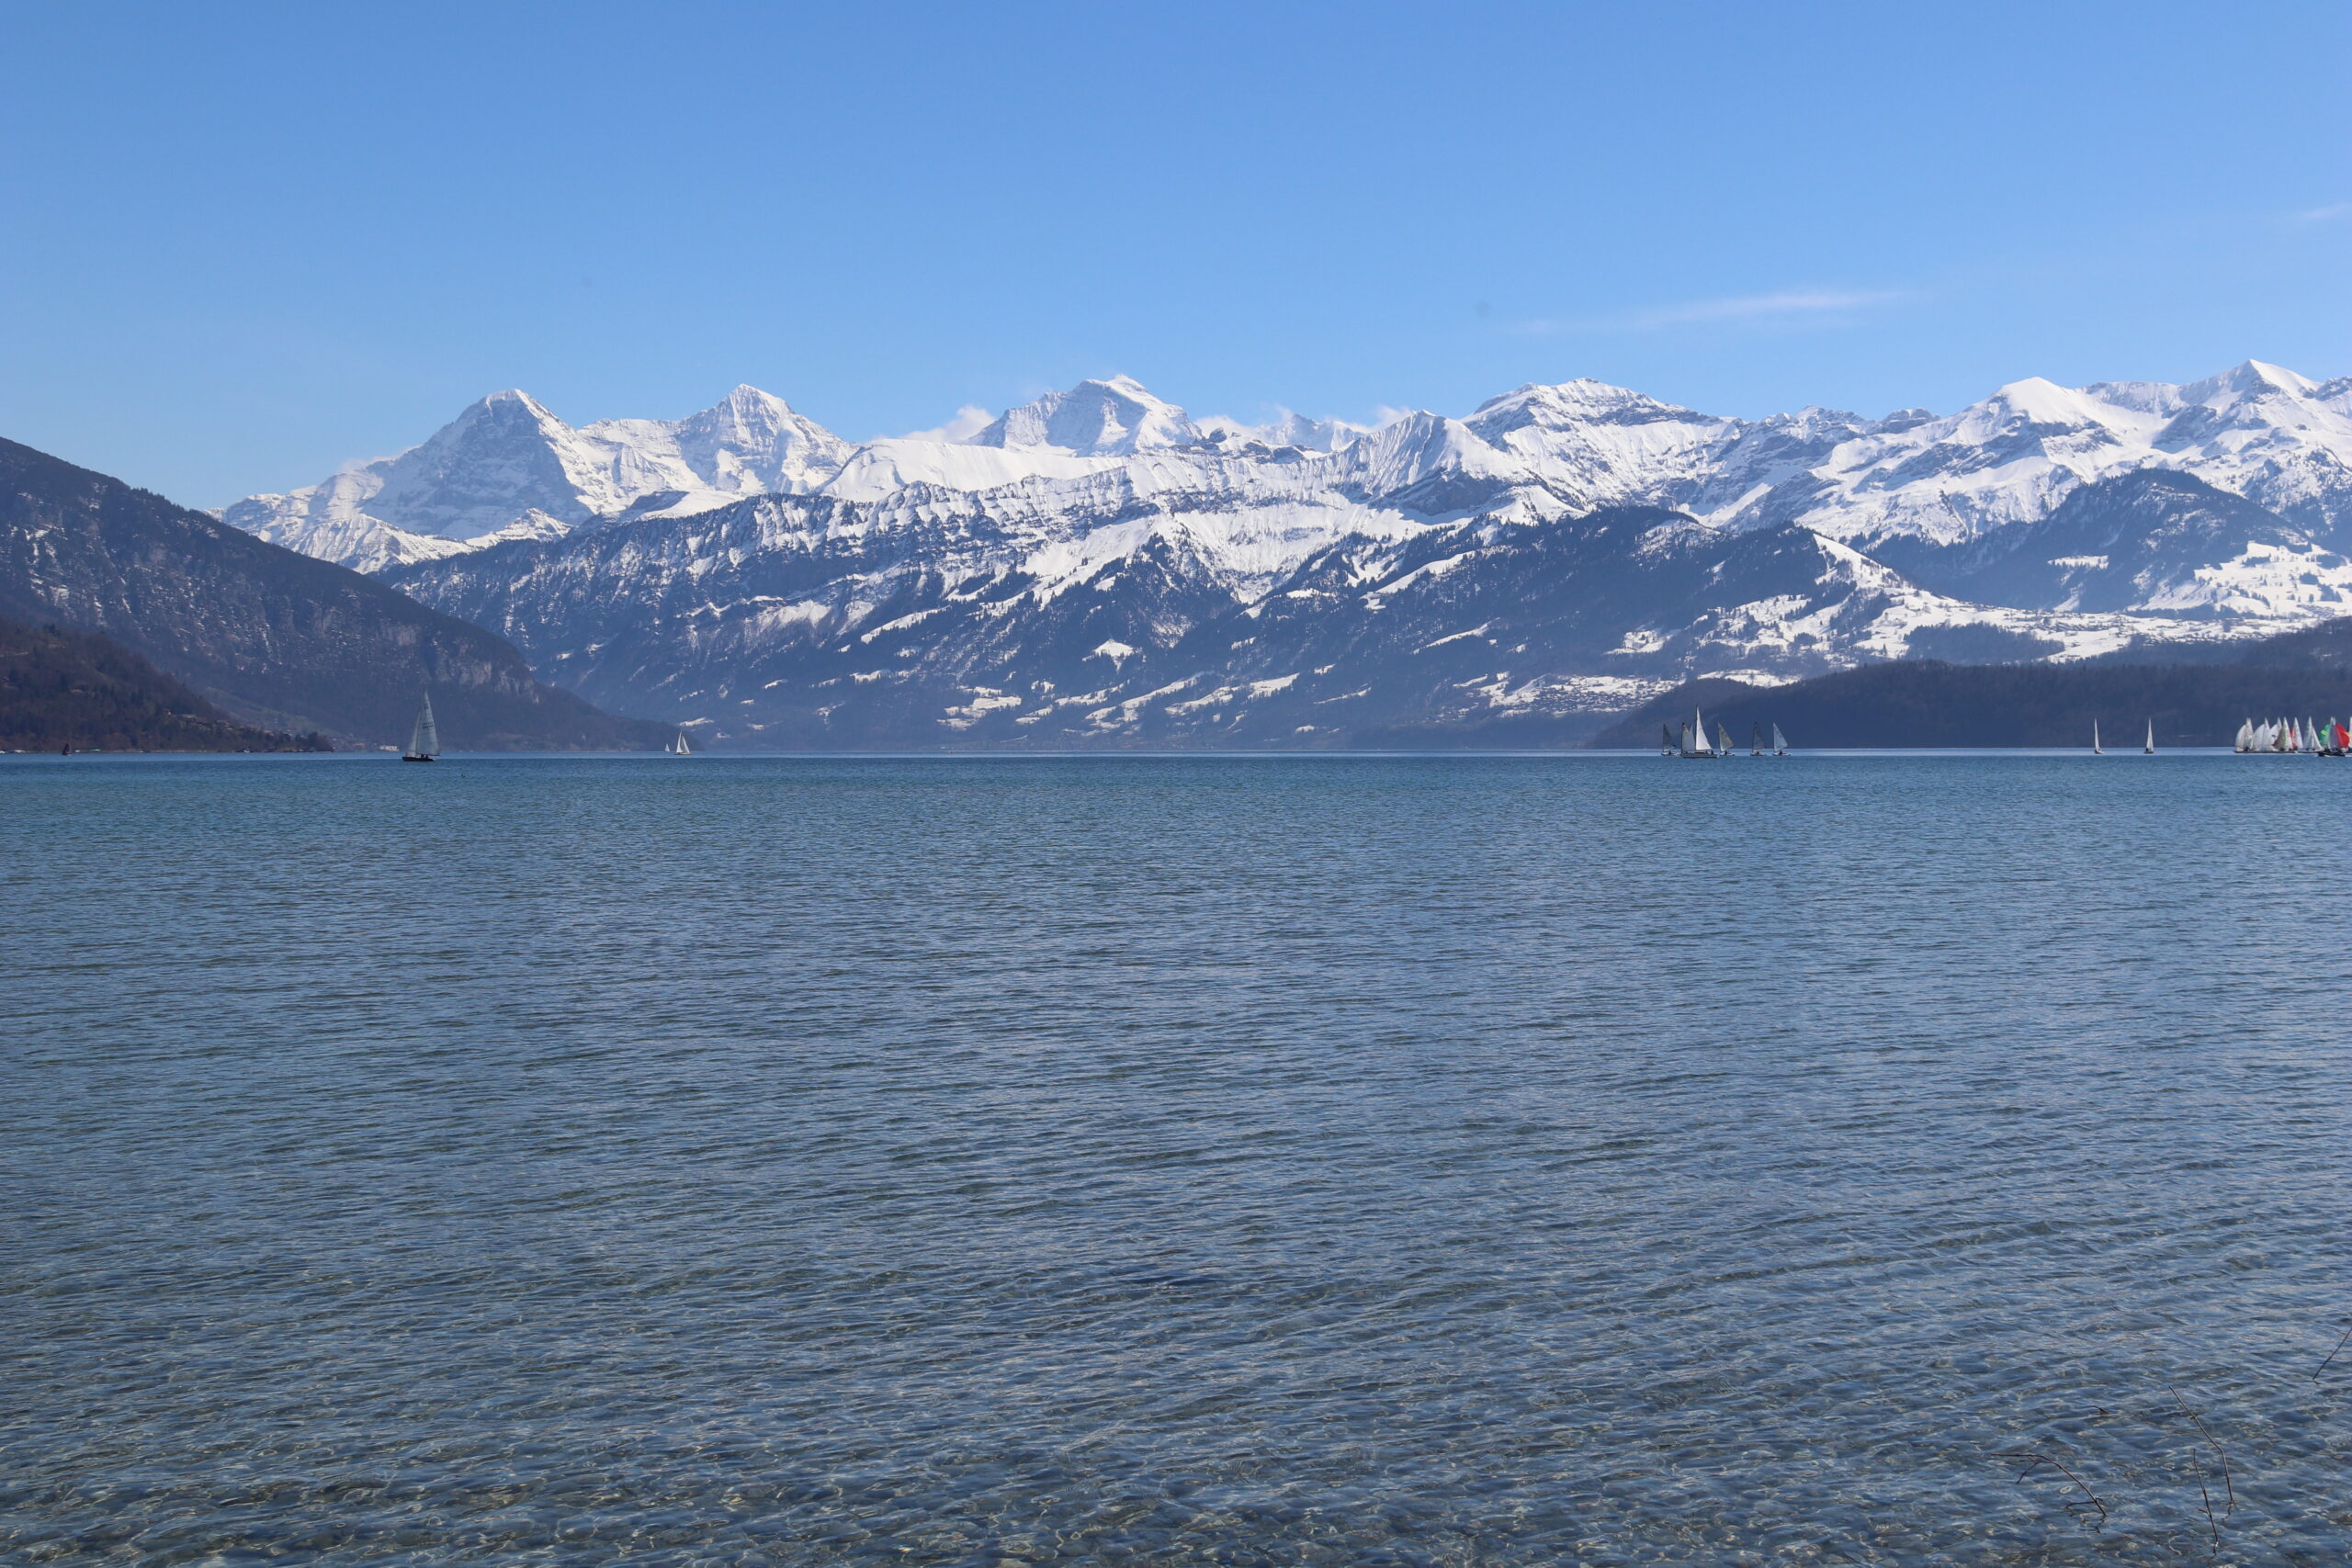 Lake Thun, in Switzerland